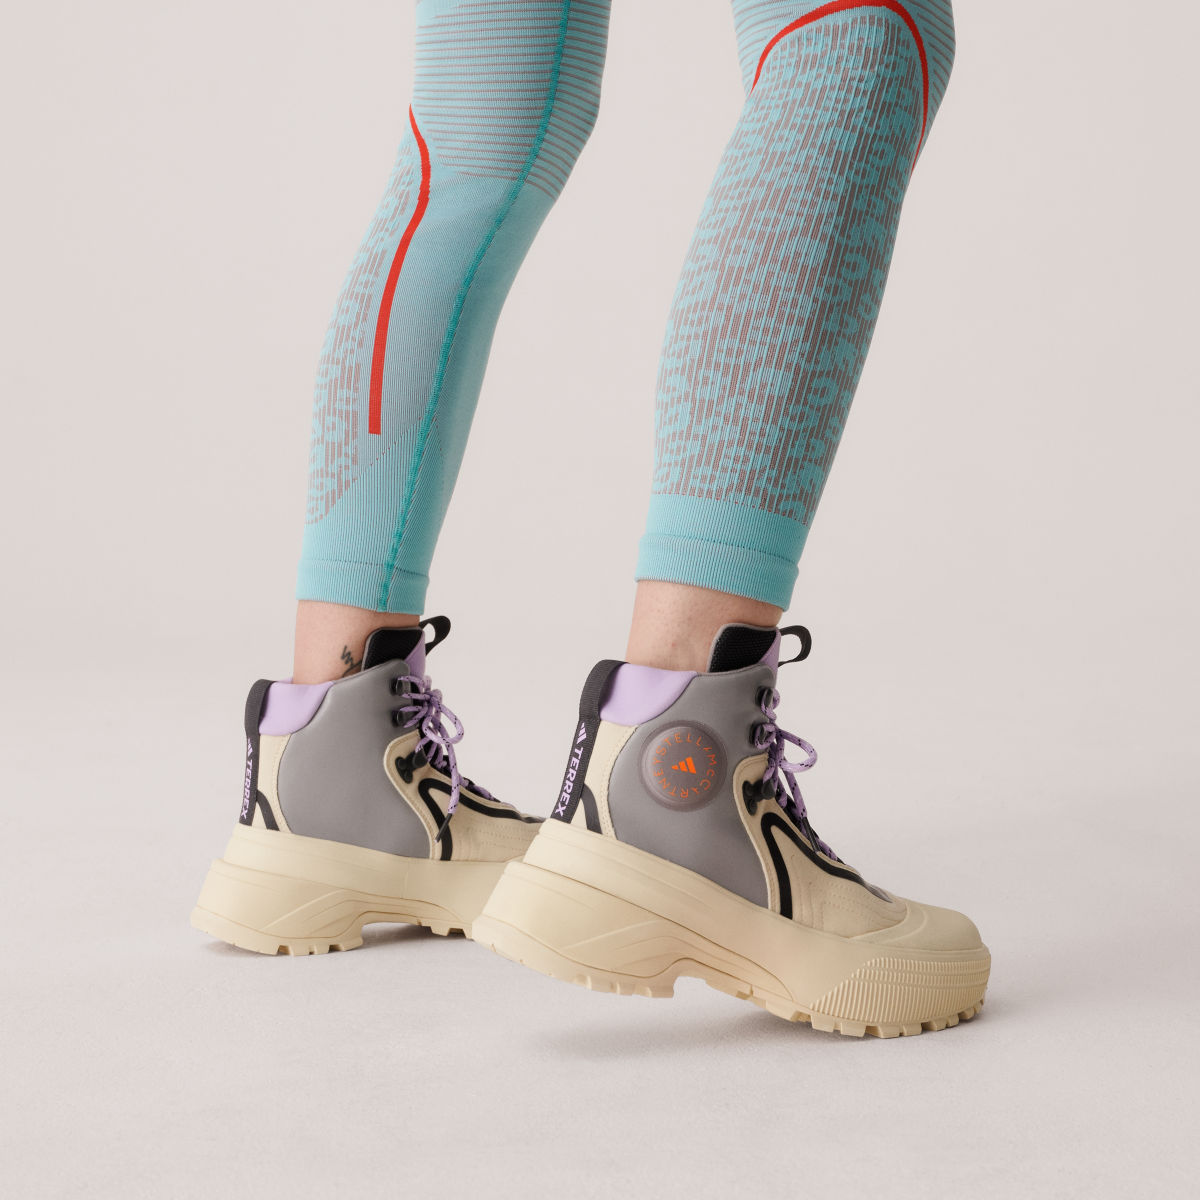 Adidas by Stella McCartney x Terrex Hiking Boots. 7